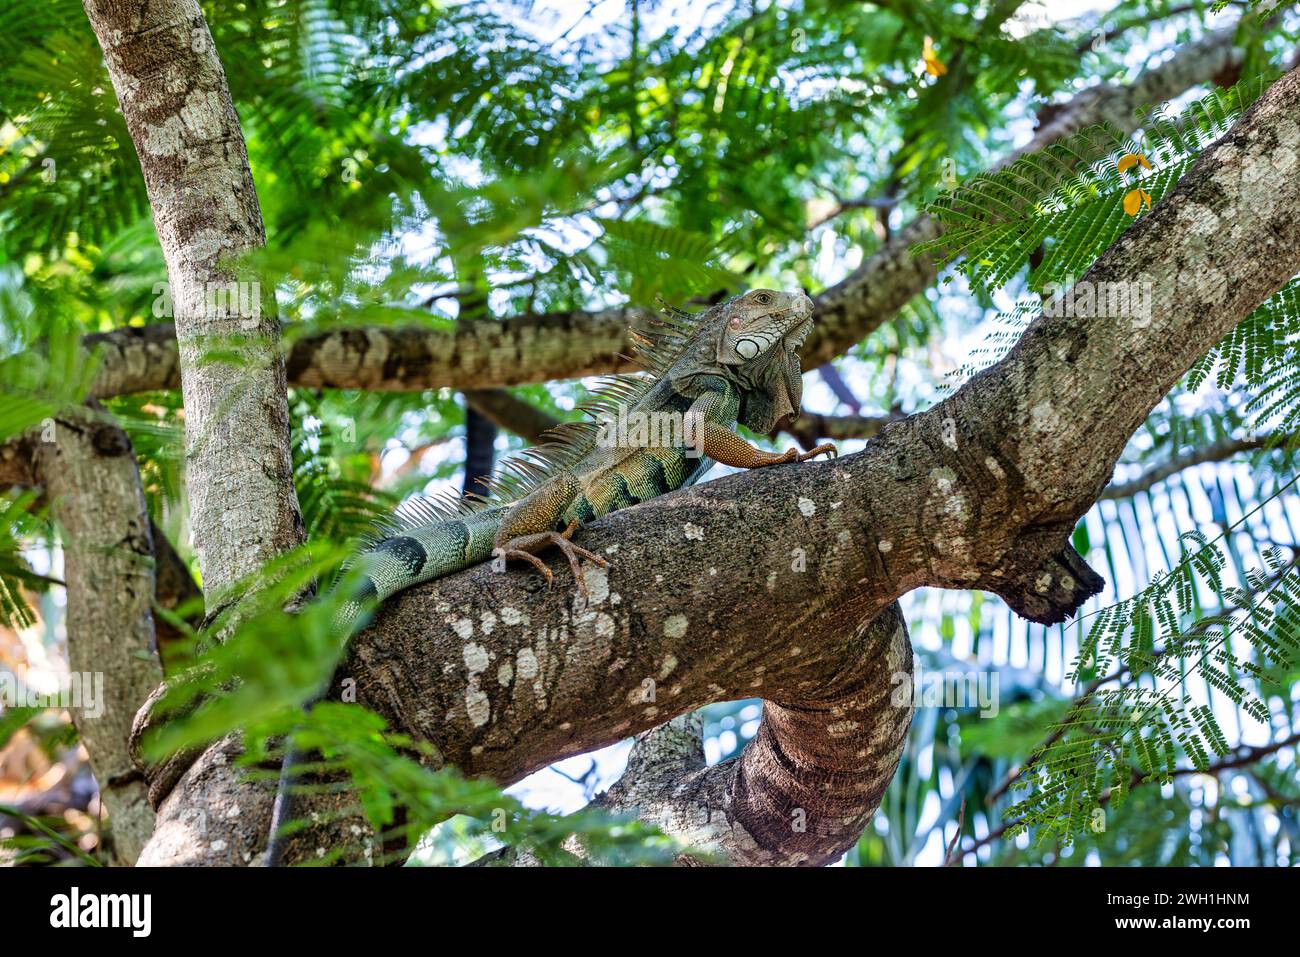 Green iguana (Iguana iguana) on tree in tropical rainforest. Centenario Park (Parque Centenario) Cartagena de Indias, Colombia wildlife animal. Stock Photo